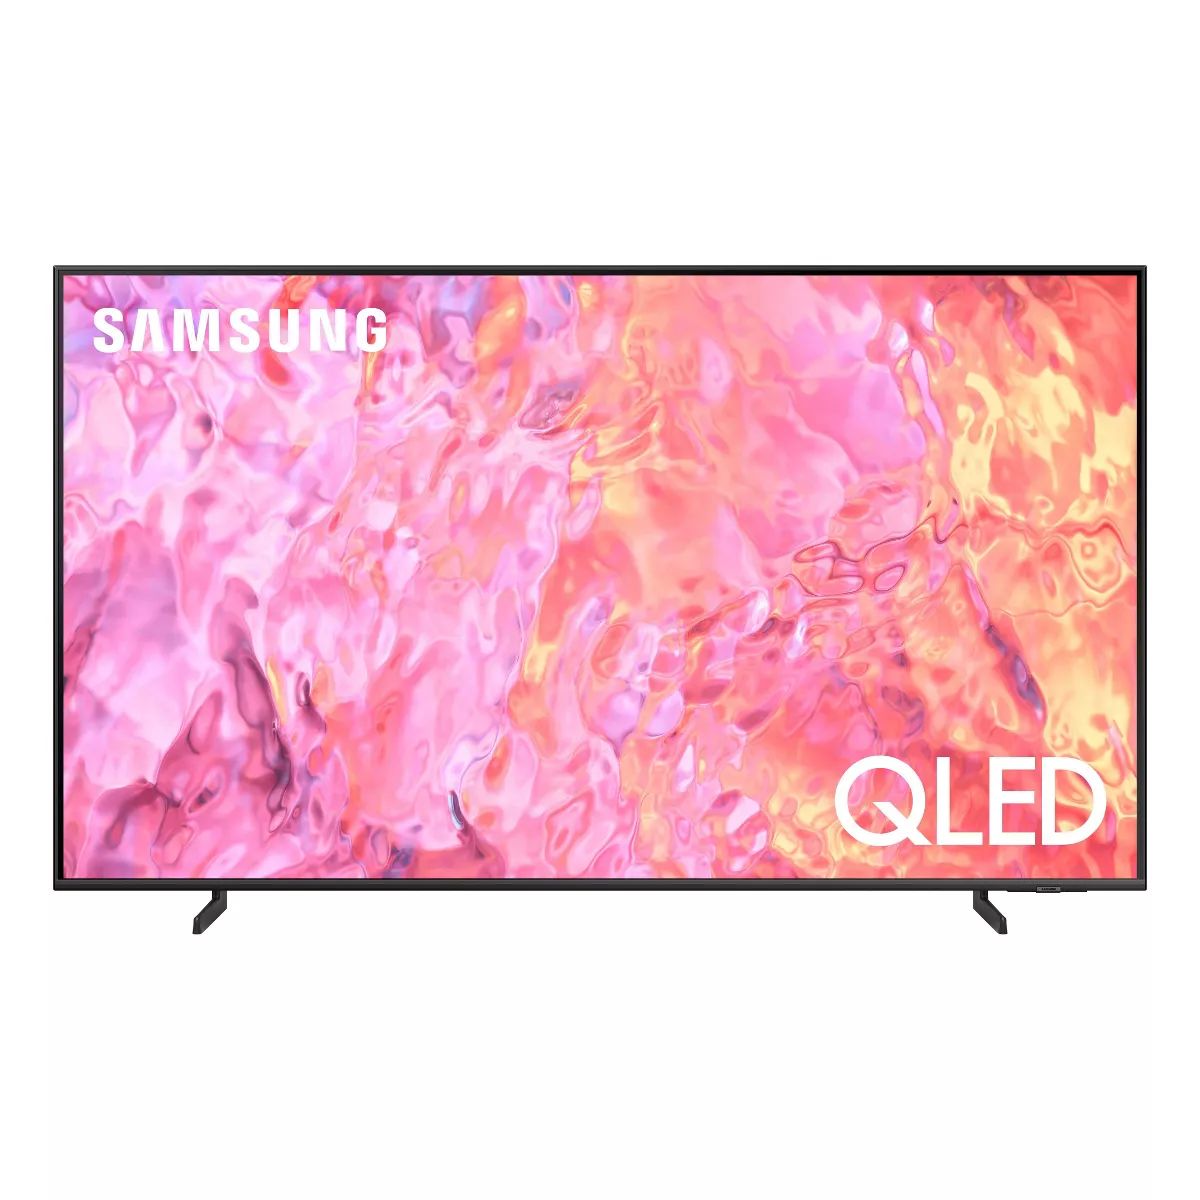 Samsung 55" class Q60C QLED UHD 4K Smart TV - Titan Gray (QN55Q60C) | Target